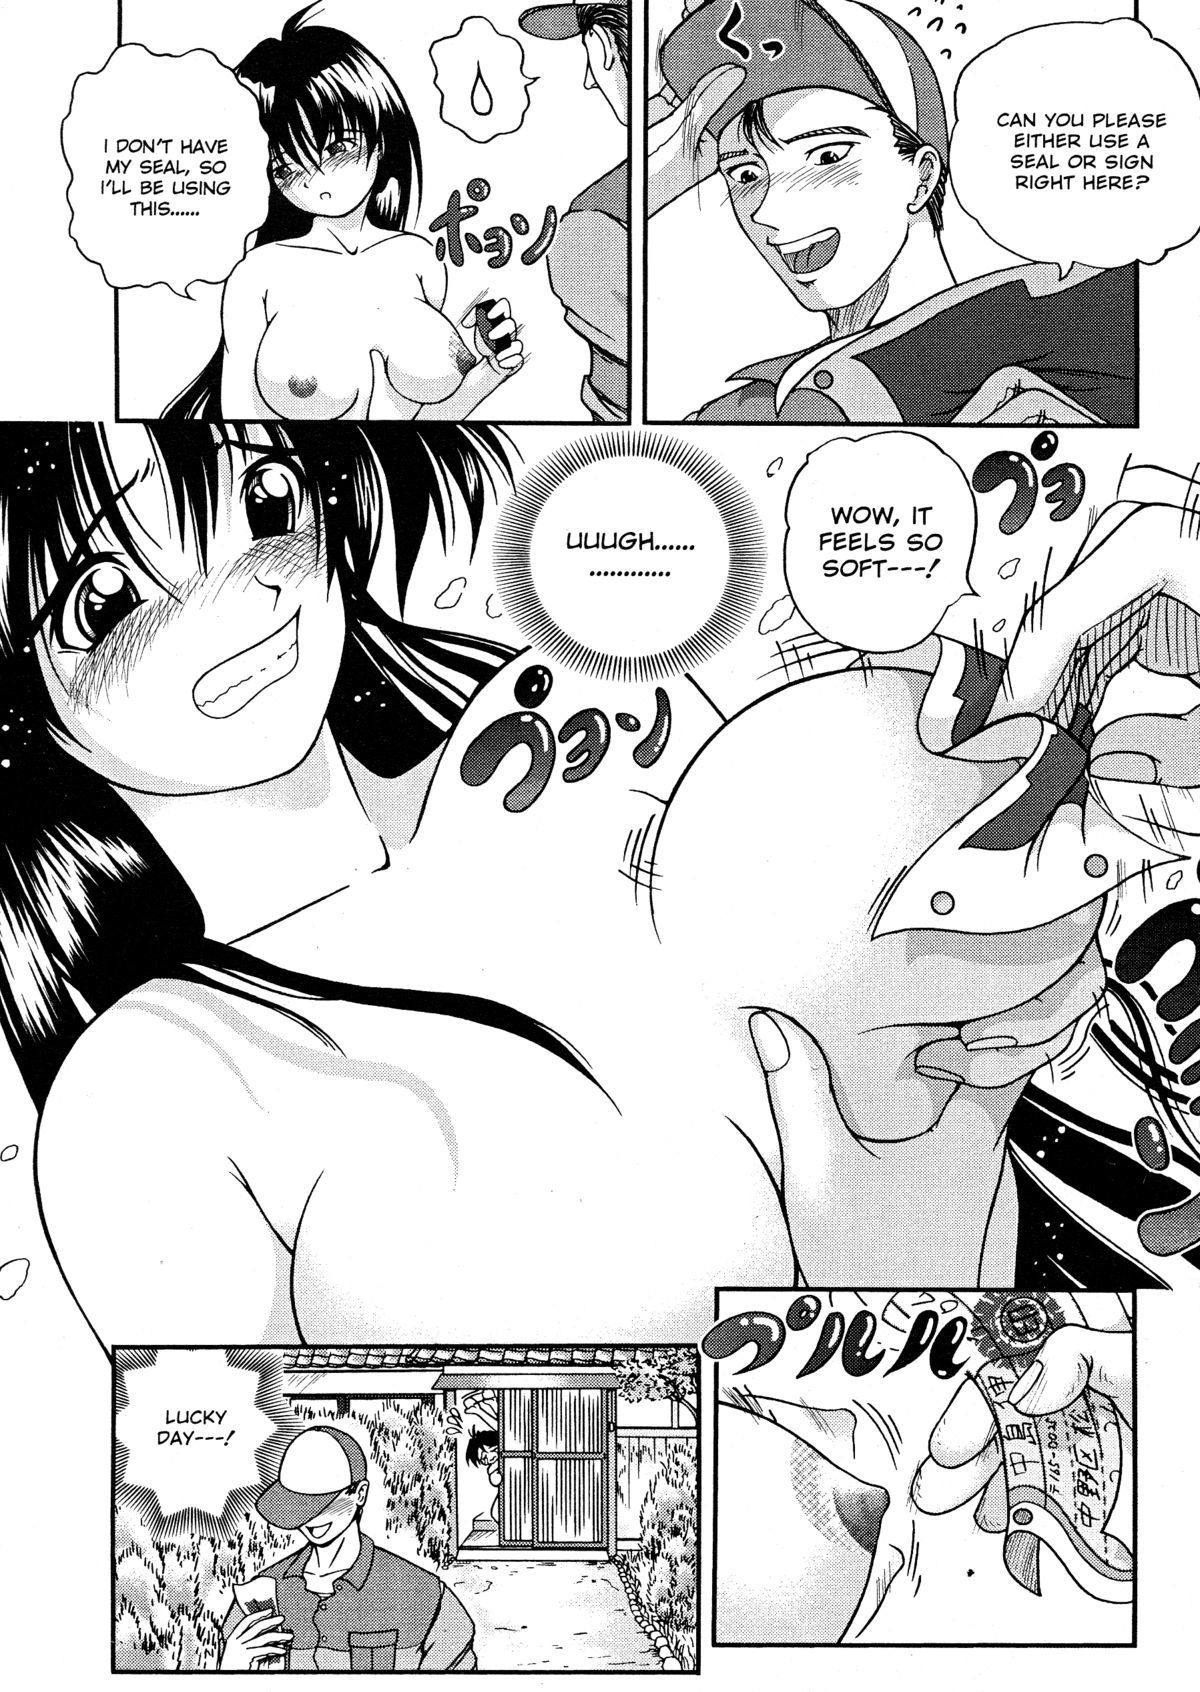 Flashbang!Hi-res 158 hentai manga